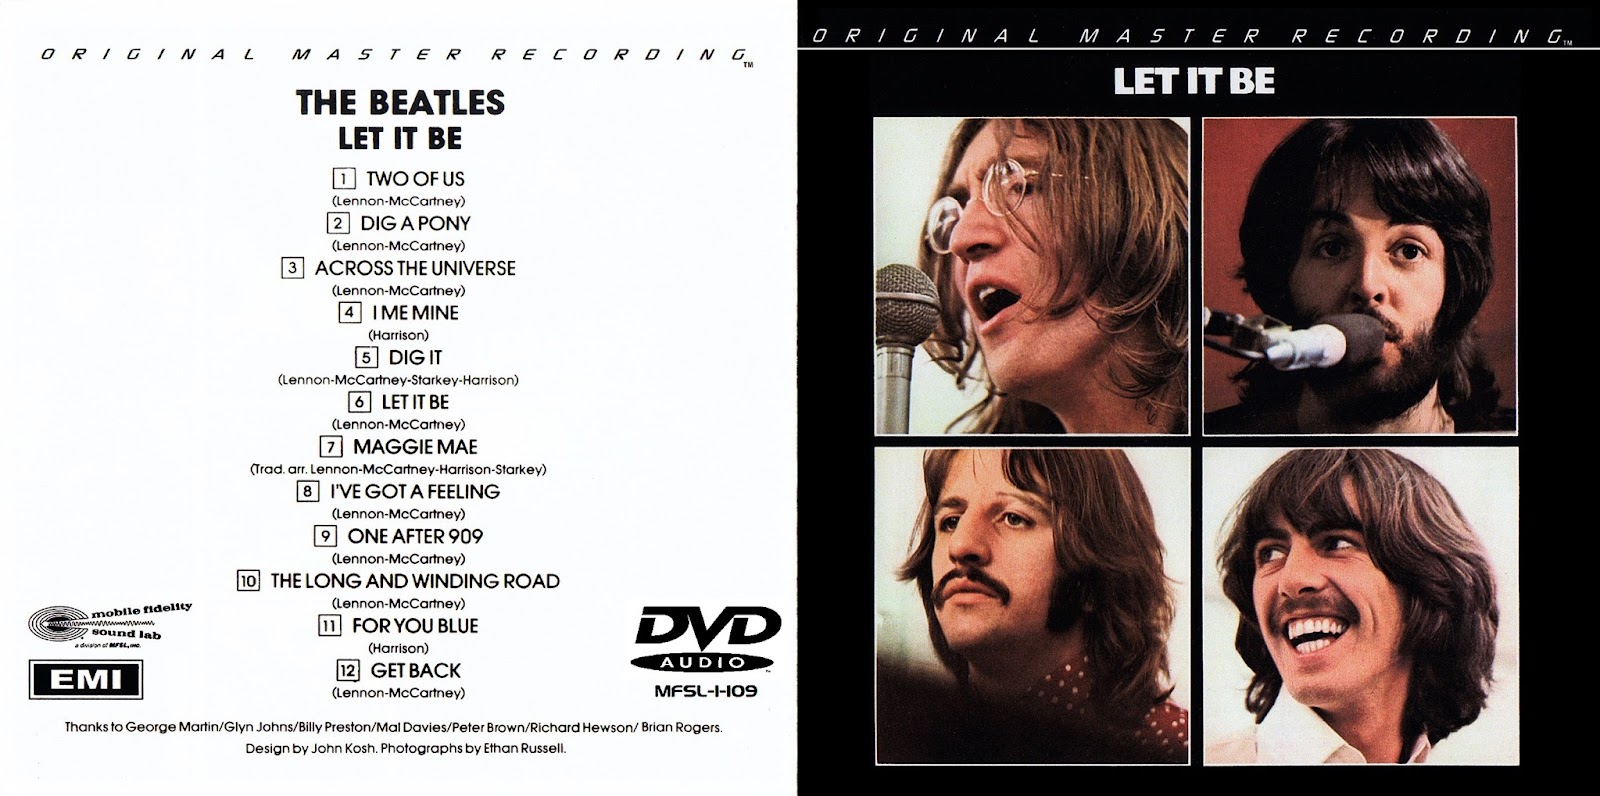 Лет ит би слушать. “Let it be” сингл 1970. The Beatles Let it be 1970 обложка. The Beatles - Let it be. The Beatles "Let it be, CD".